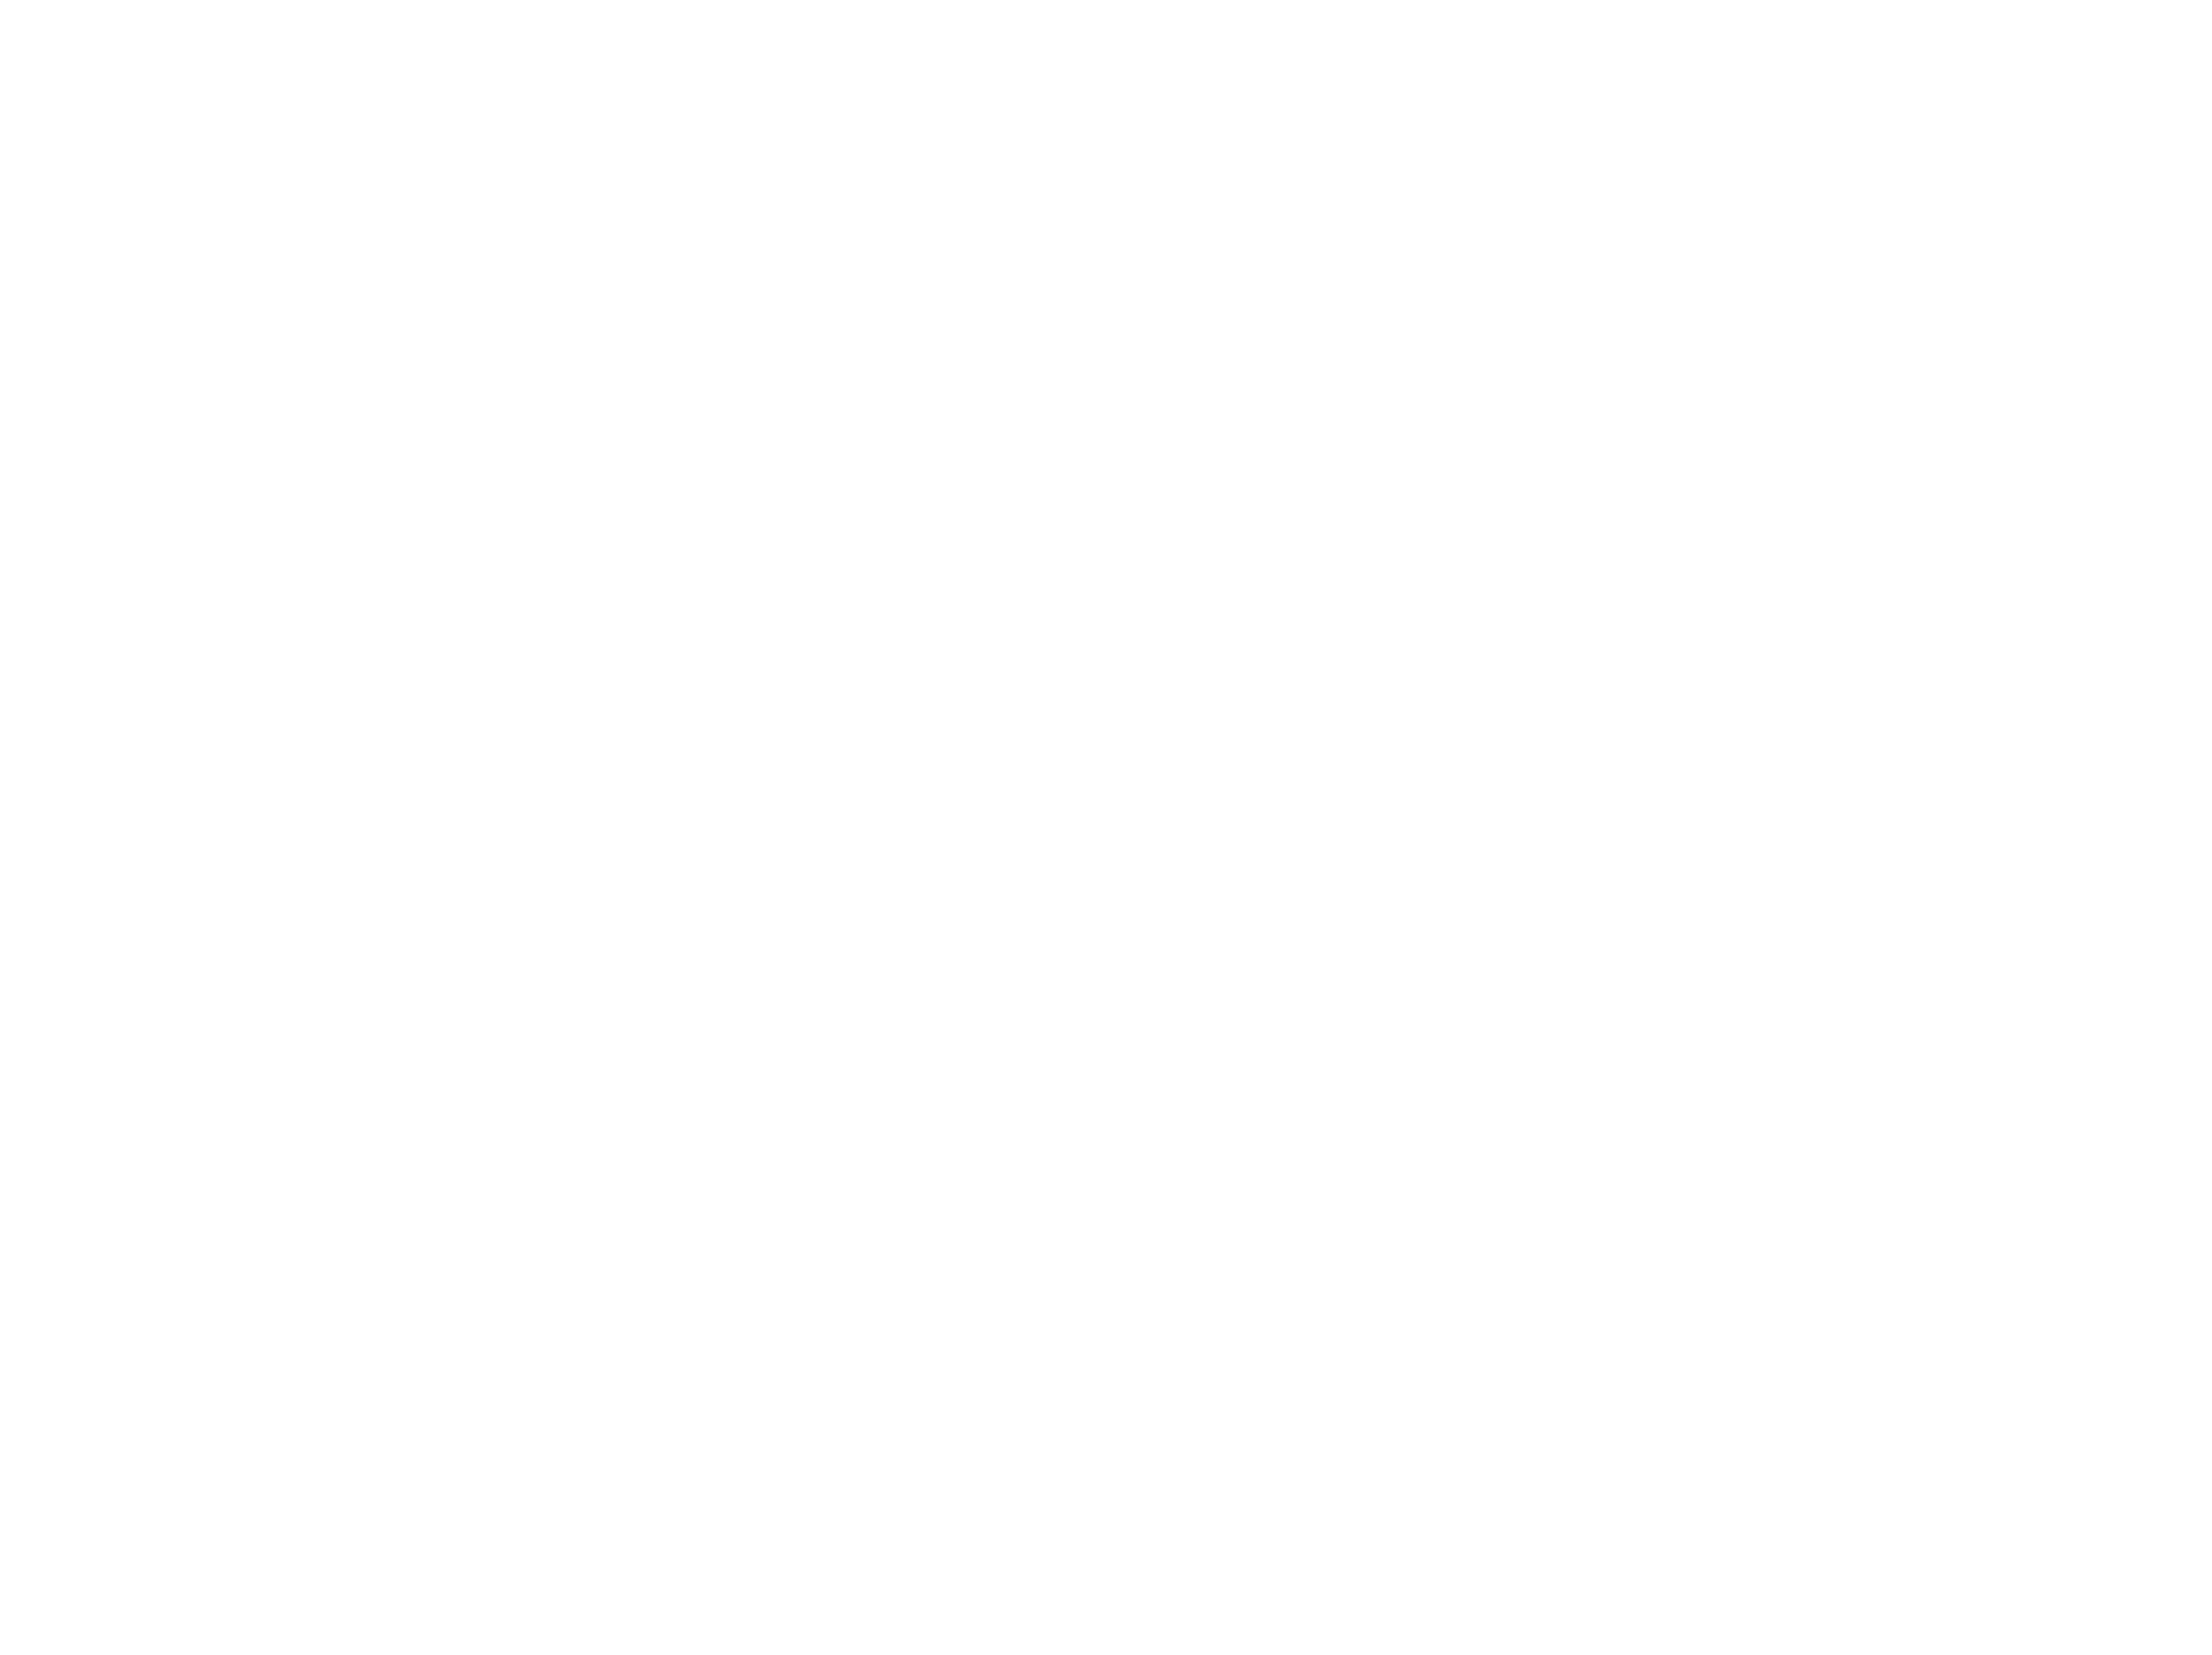 Hon Thom Paradise Island